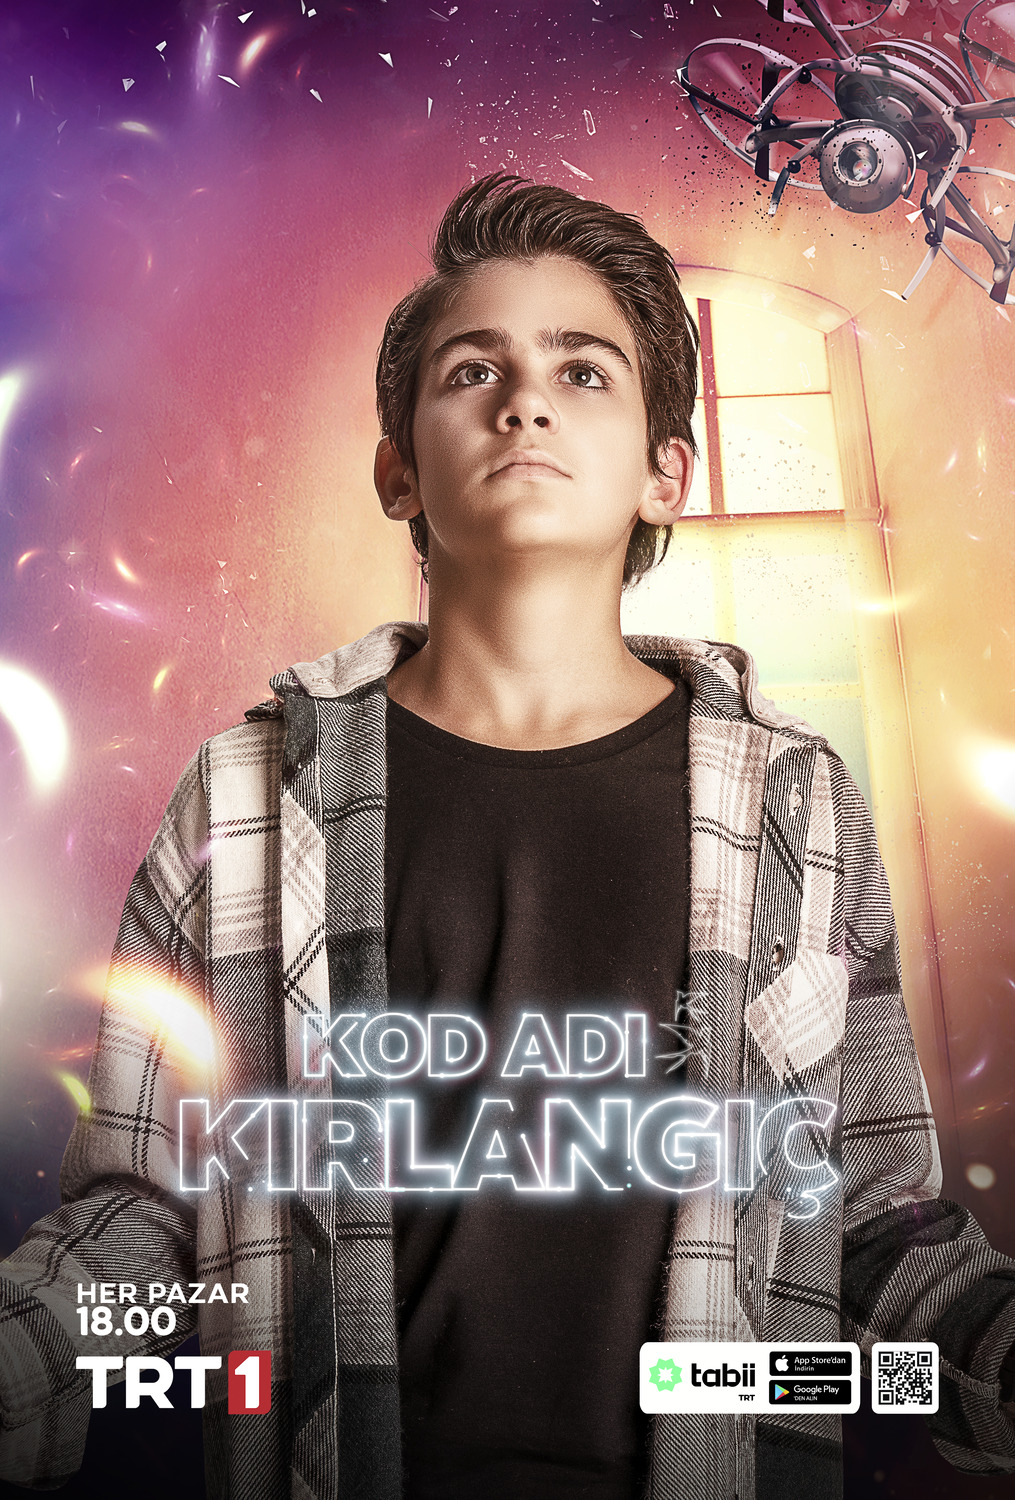 Extra Large TV Poster Image for Kod Adı Kırlangıç (#8 of 11)